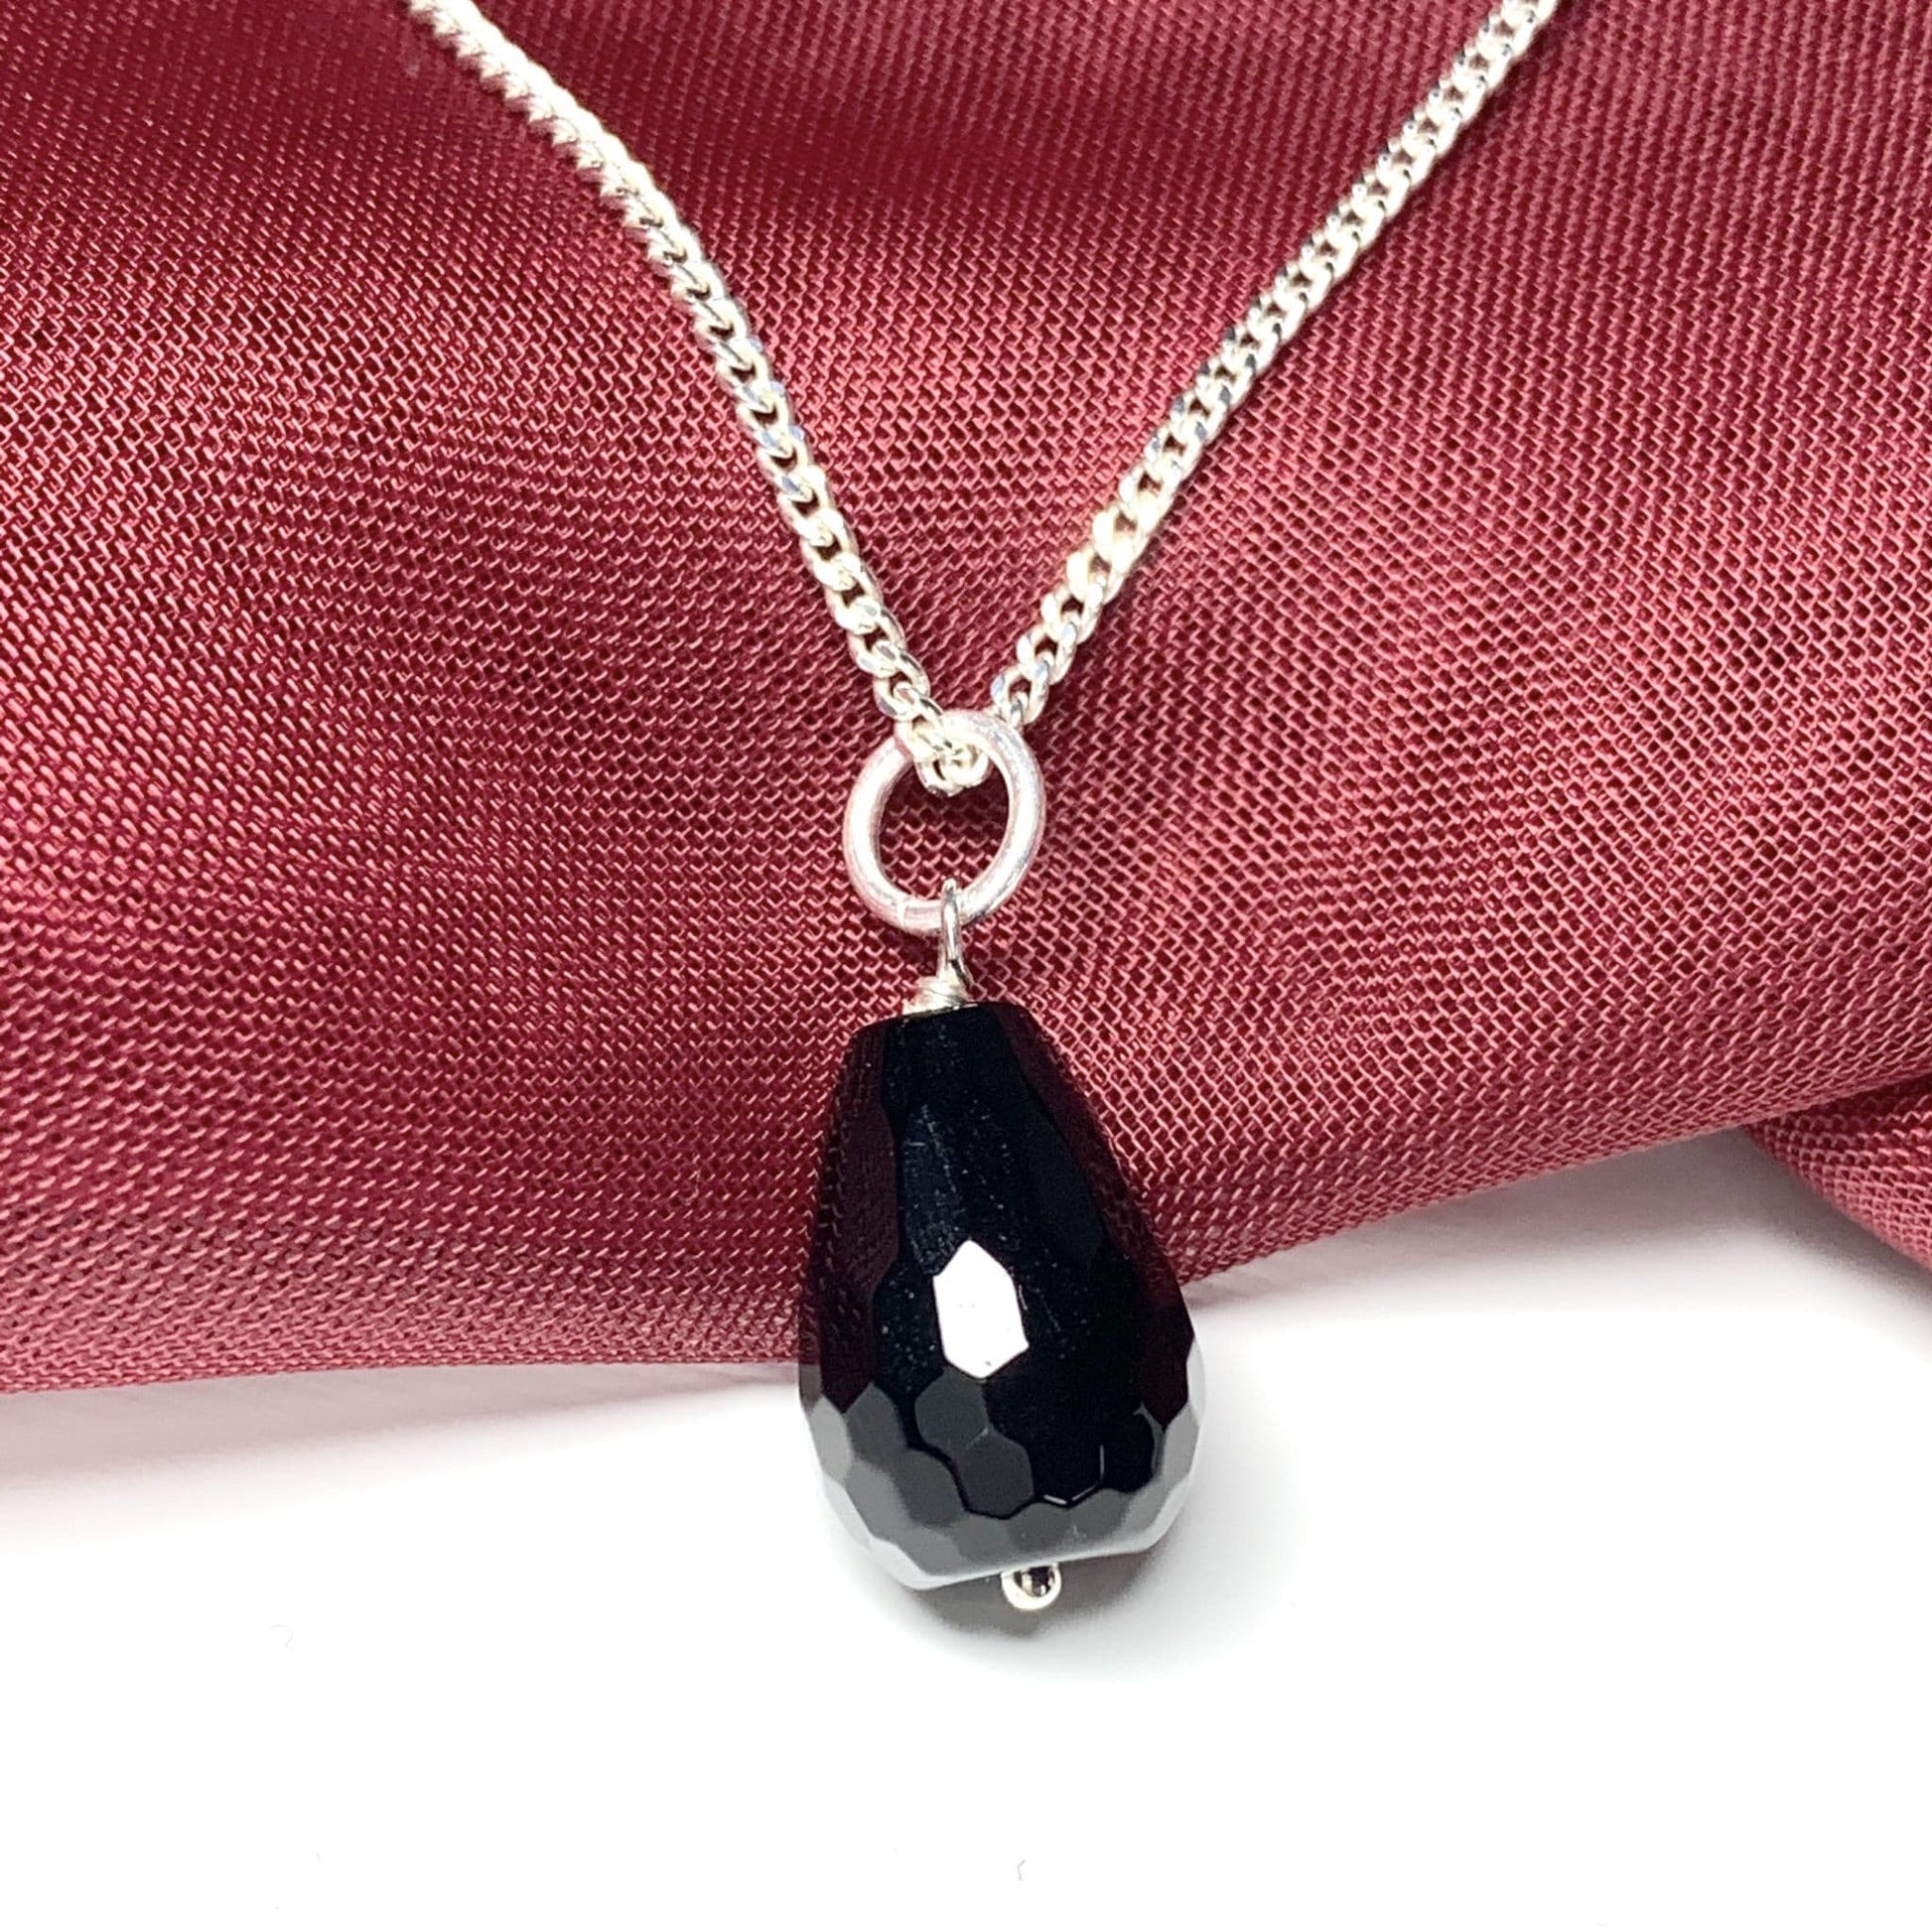 Medium tear drop silver pear shaped onyx necklace pendent